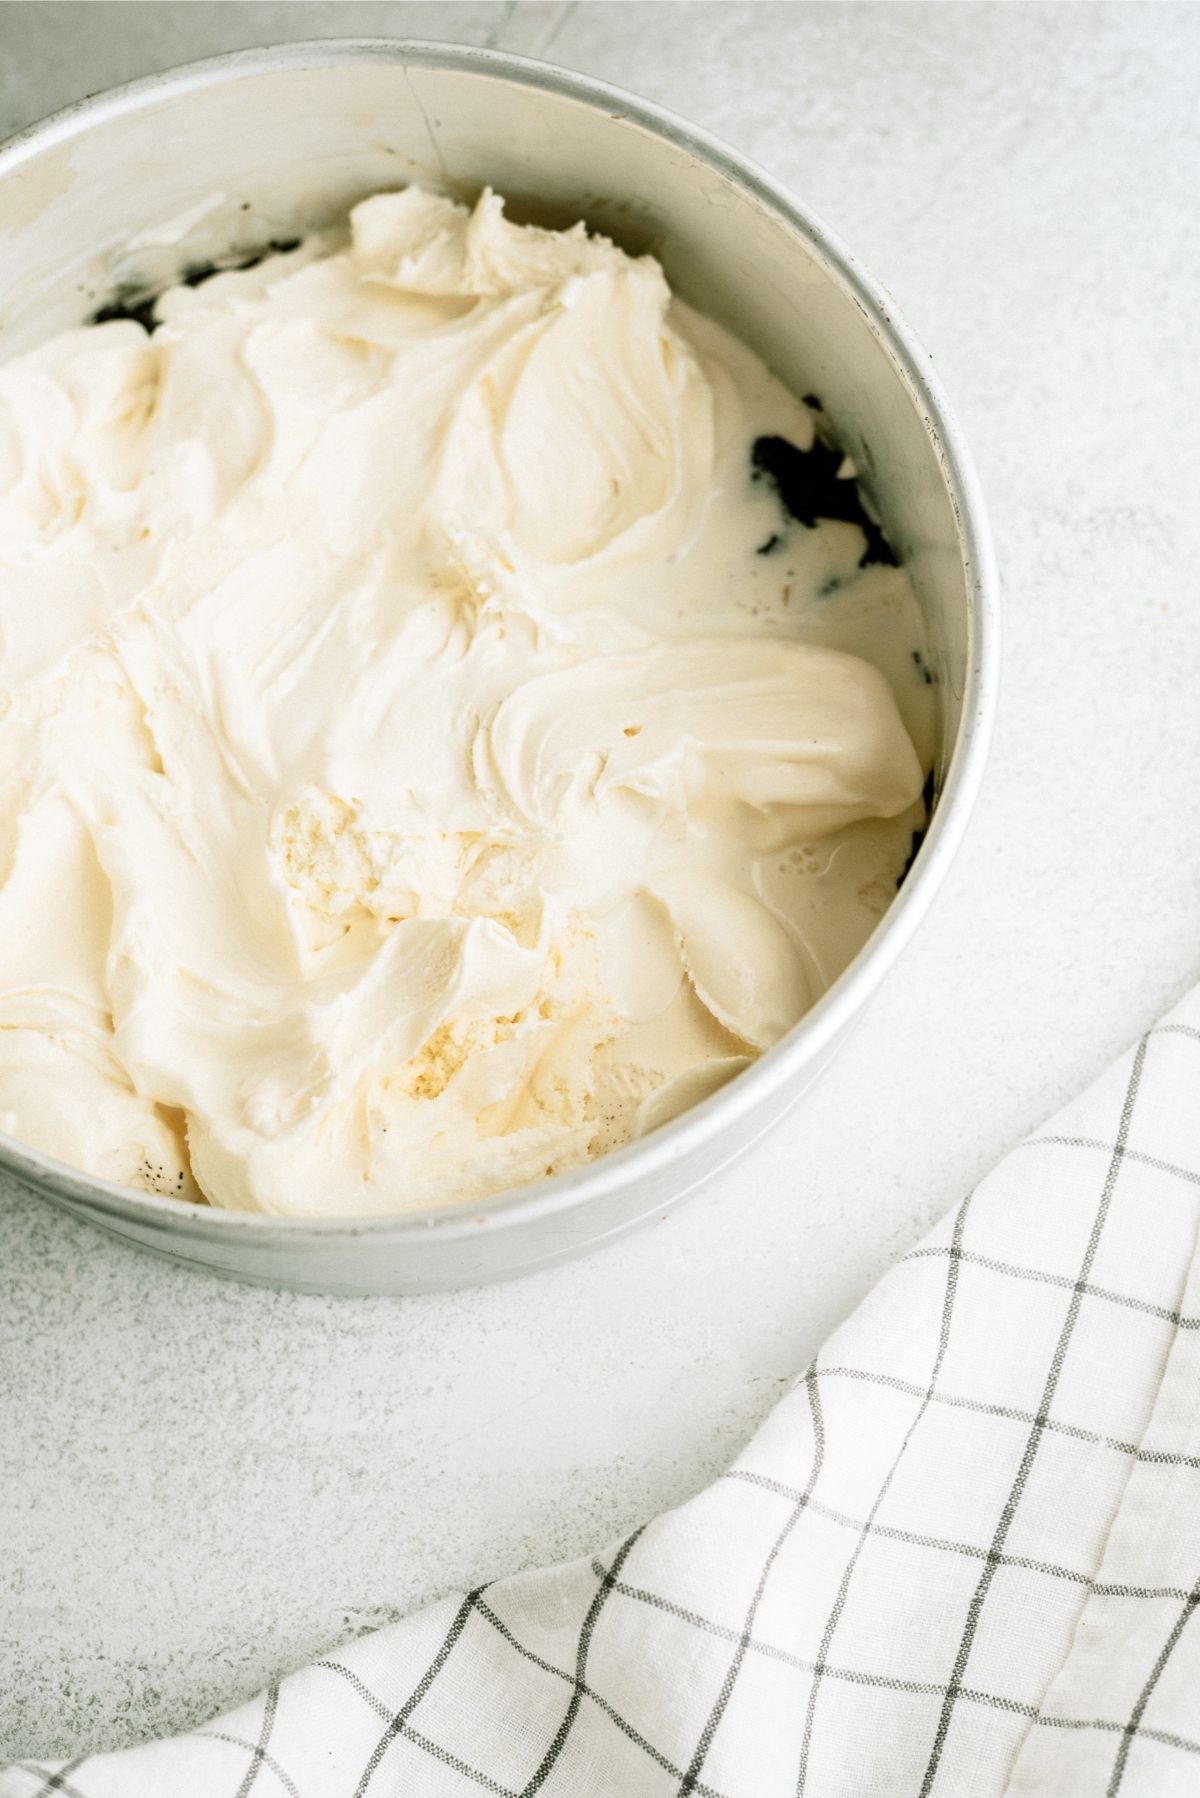 Softened Vanilla Ice Cream spread over crushed oreos